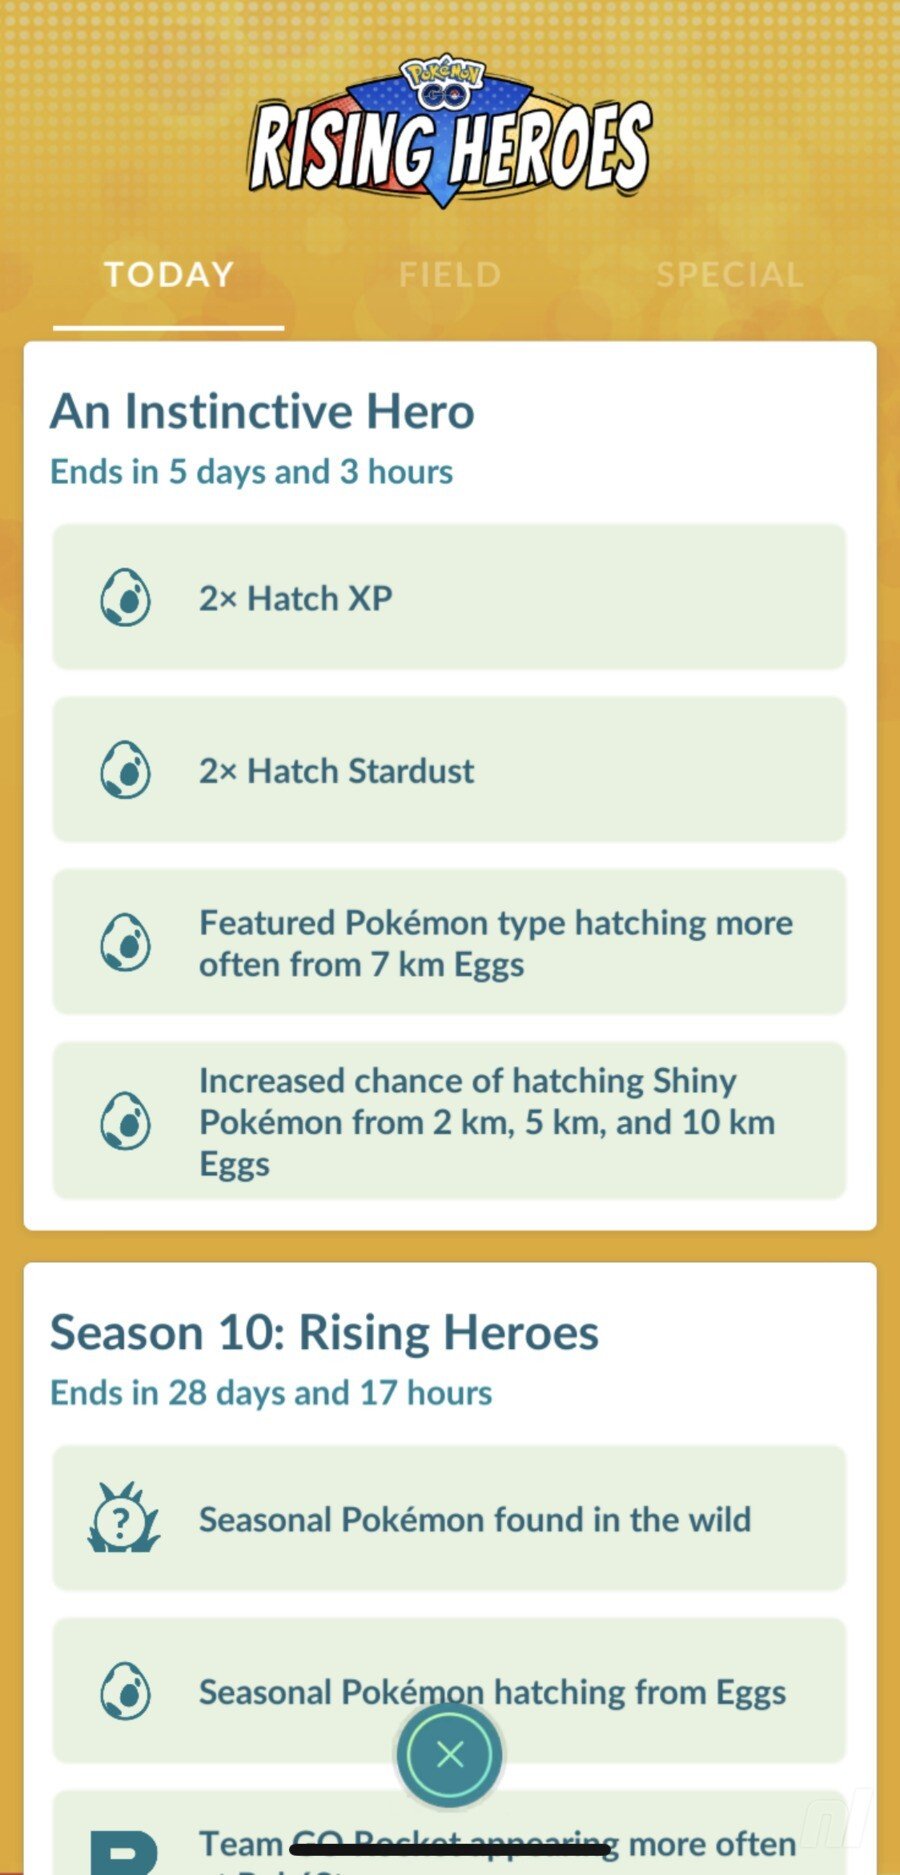 Pokémon Go' Evolution Event: Start Time, Shiny Burmy, Research Tasks & More